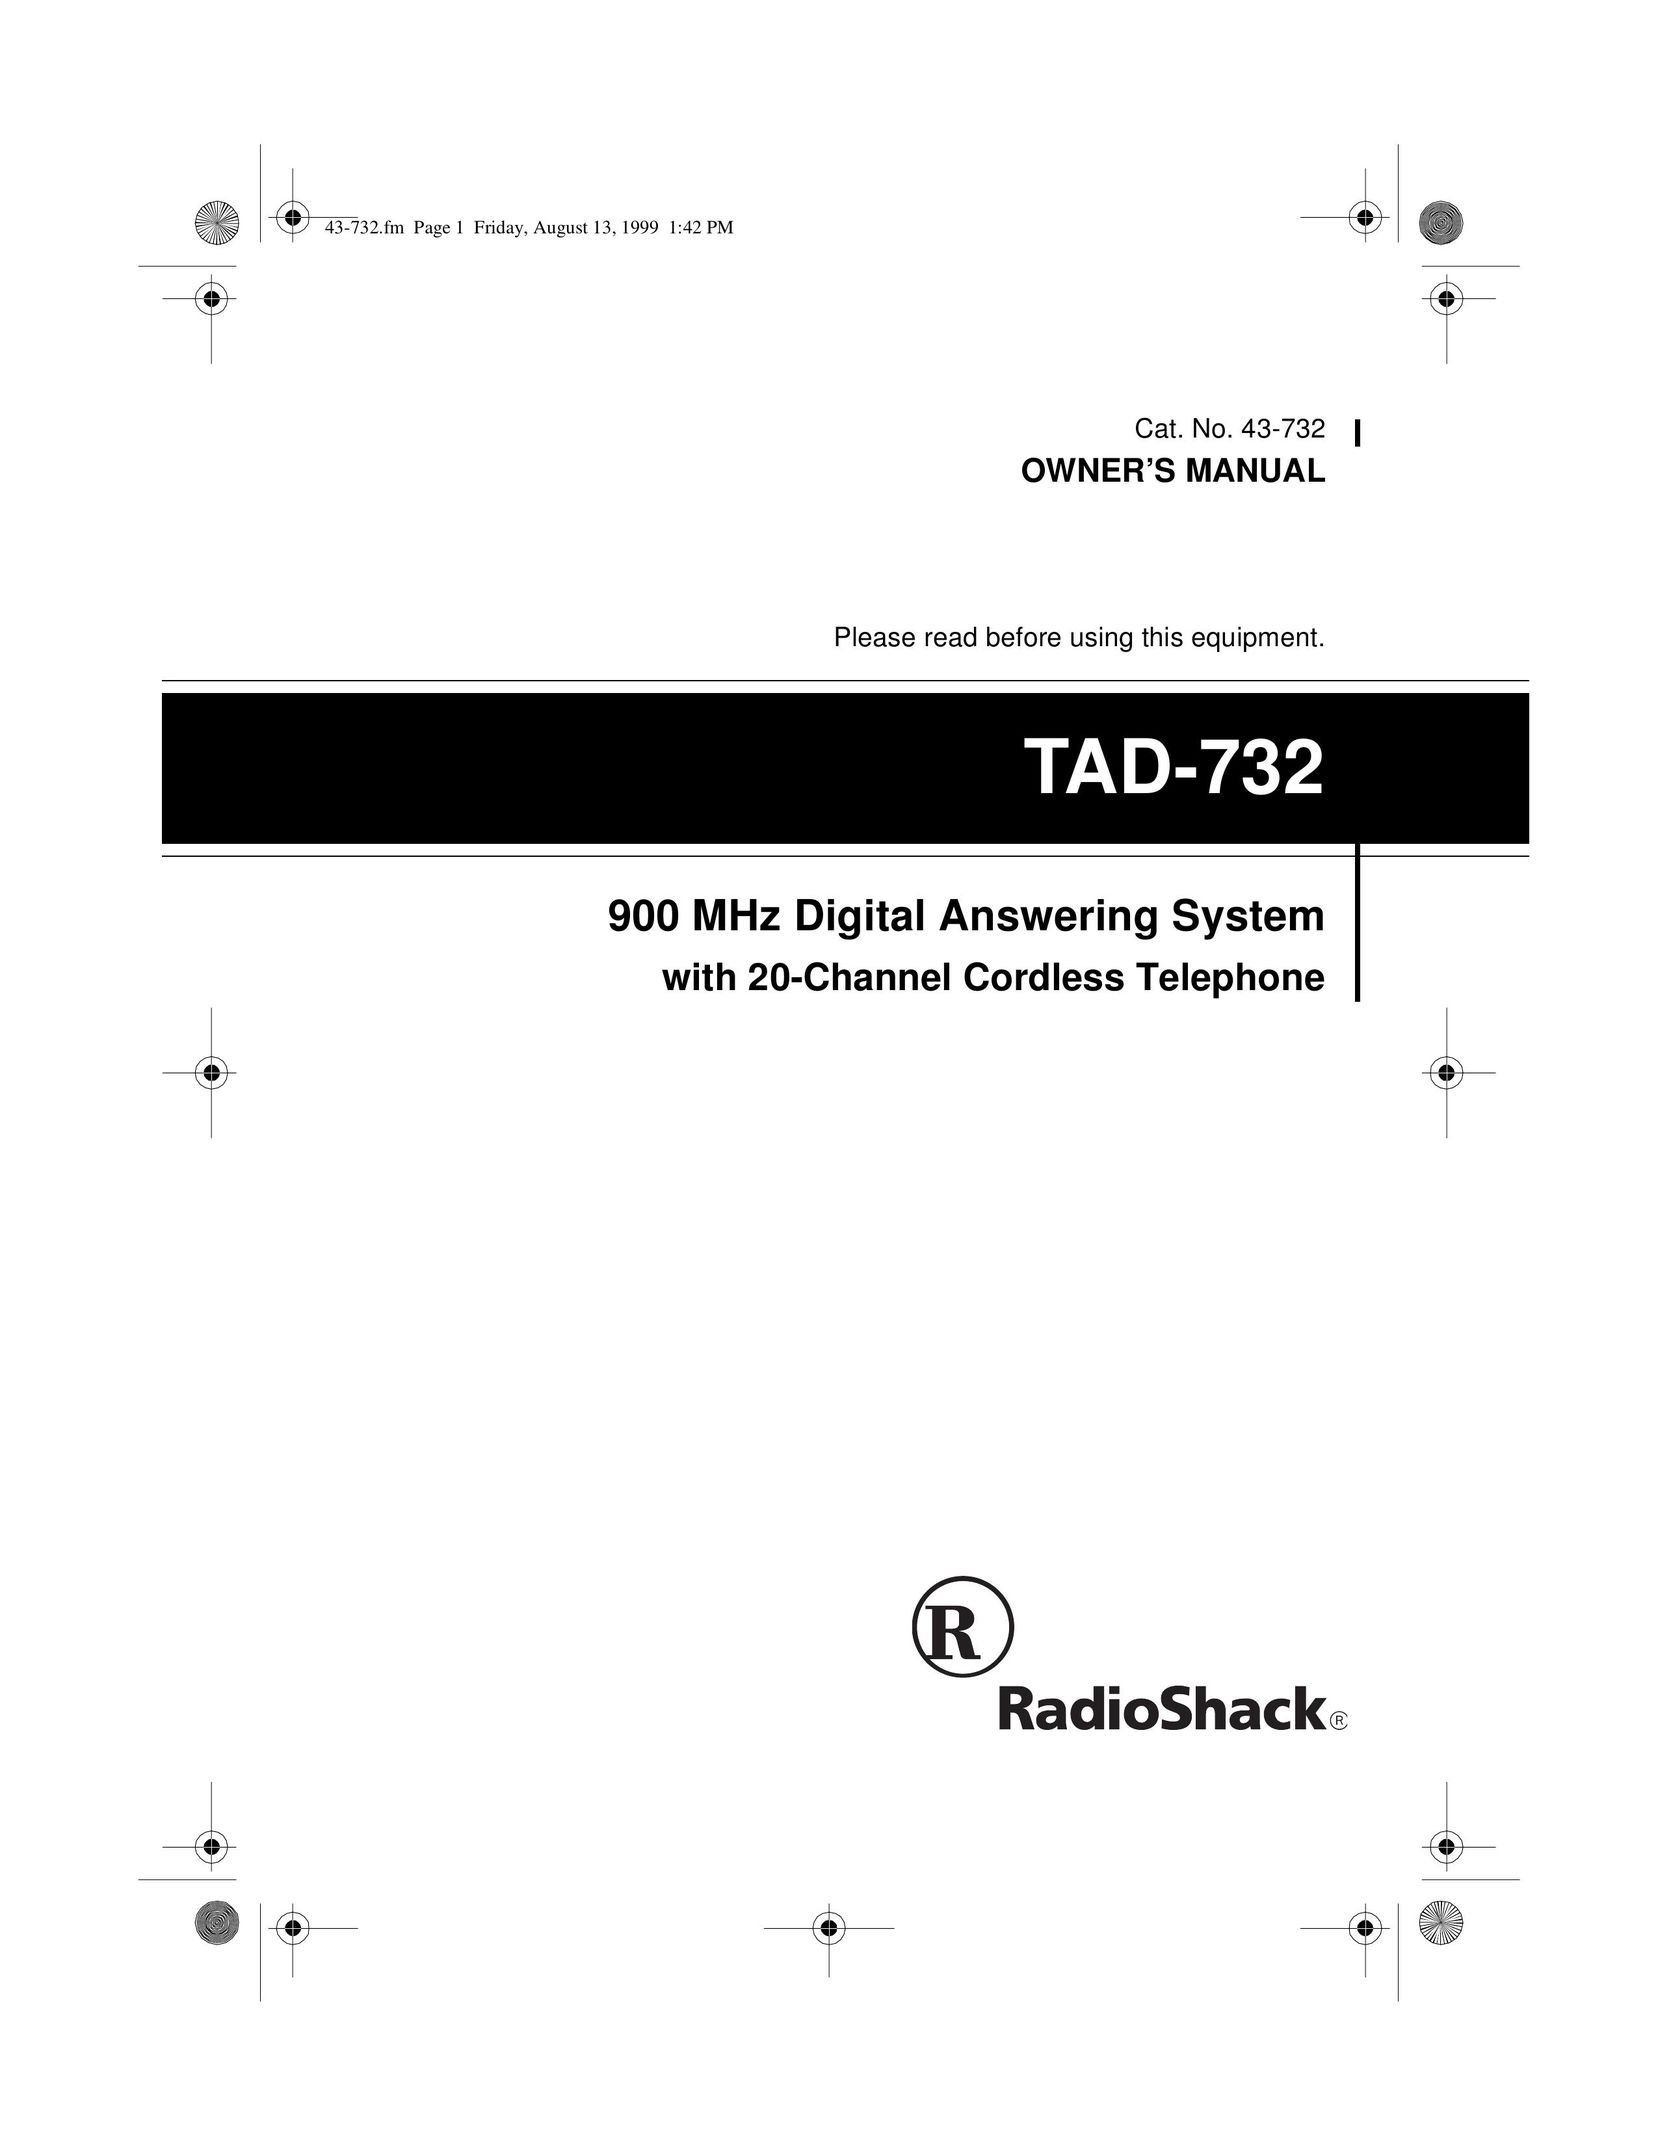 GE TAD-732 Answering Machine User Manual